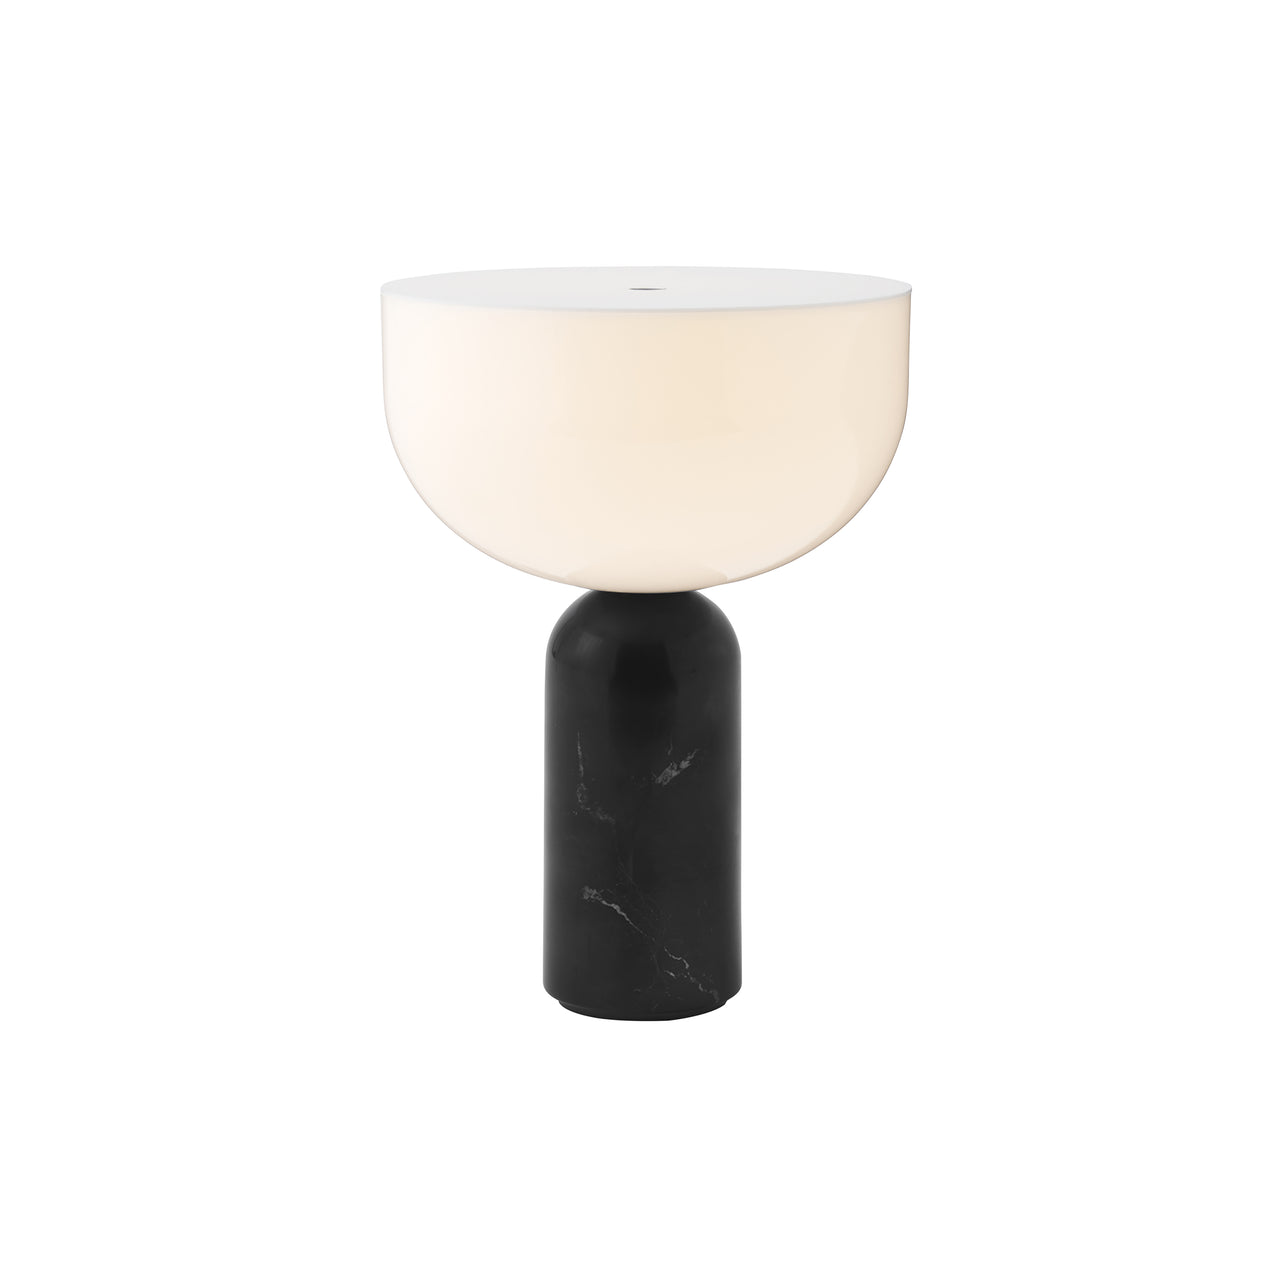 Kizu Portable Table Lamp: Black Marble